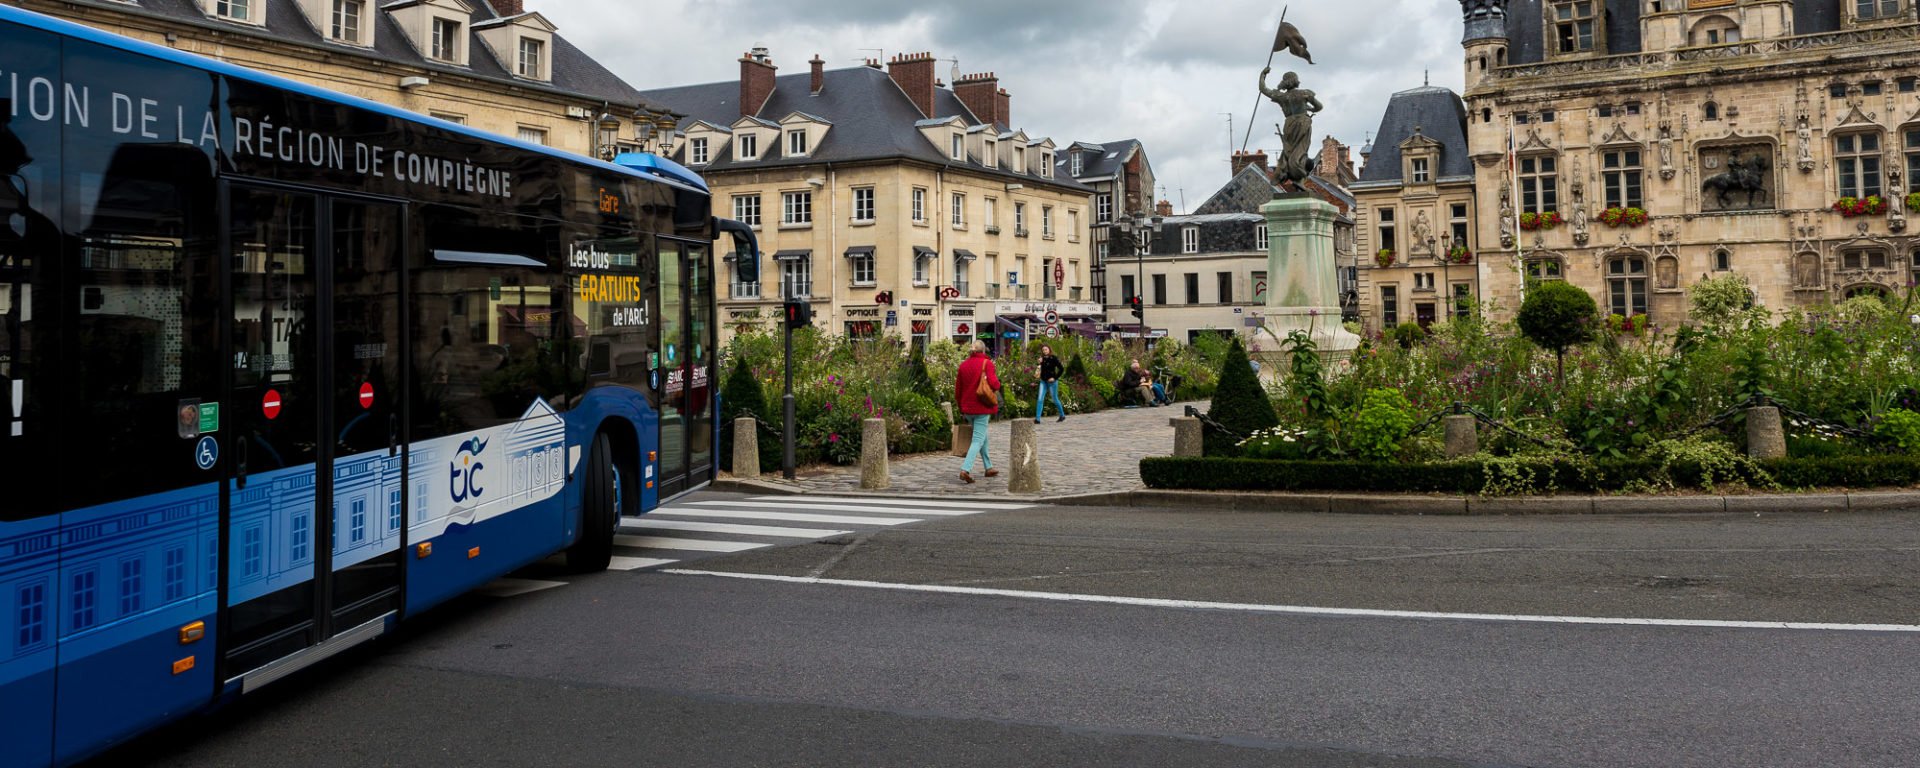 Bus_transport-urbain-Compiègne_Tic_Acary_Transdev-Haut-de-France